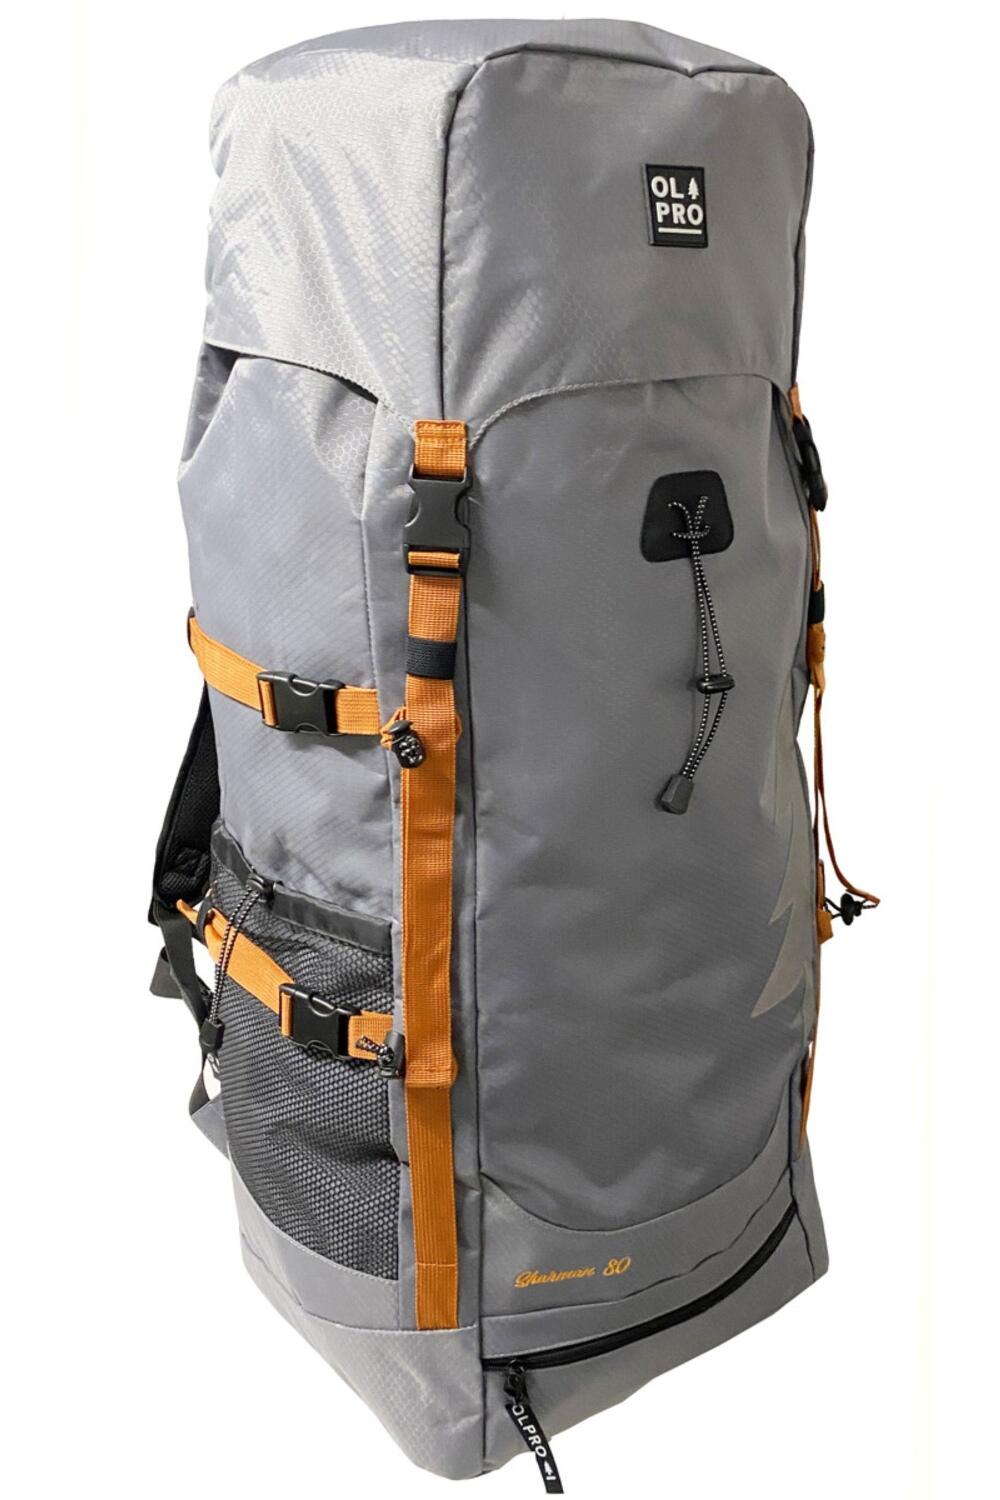 OLPRO 80L Rucksack Bag Grey 1/4